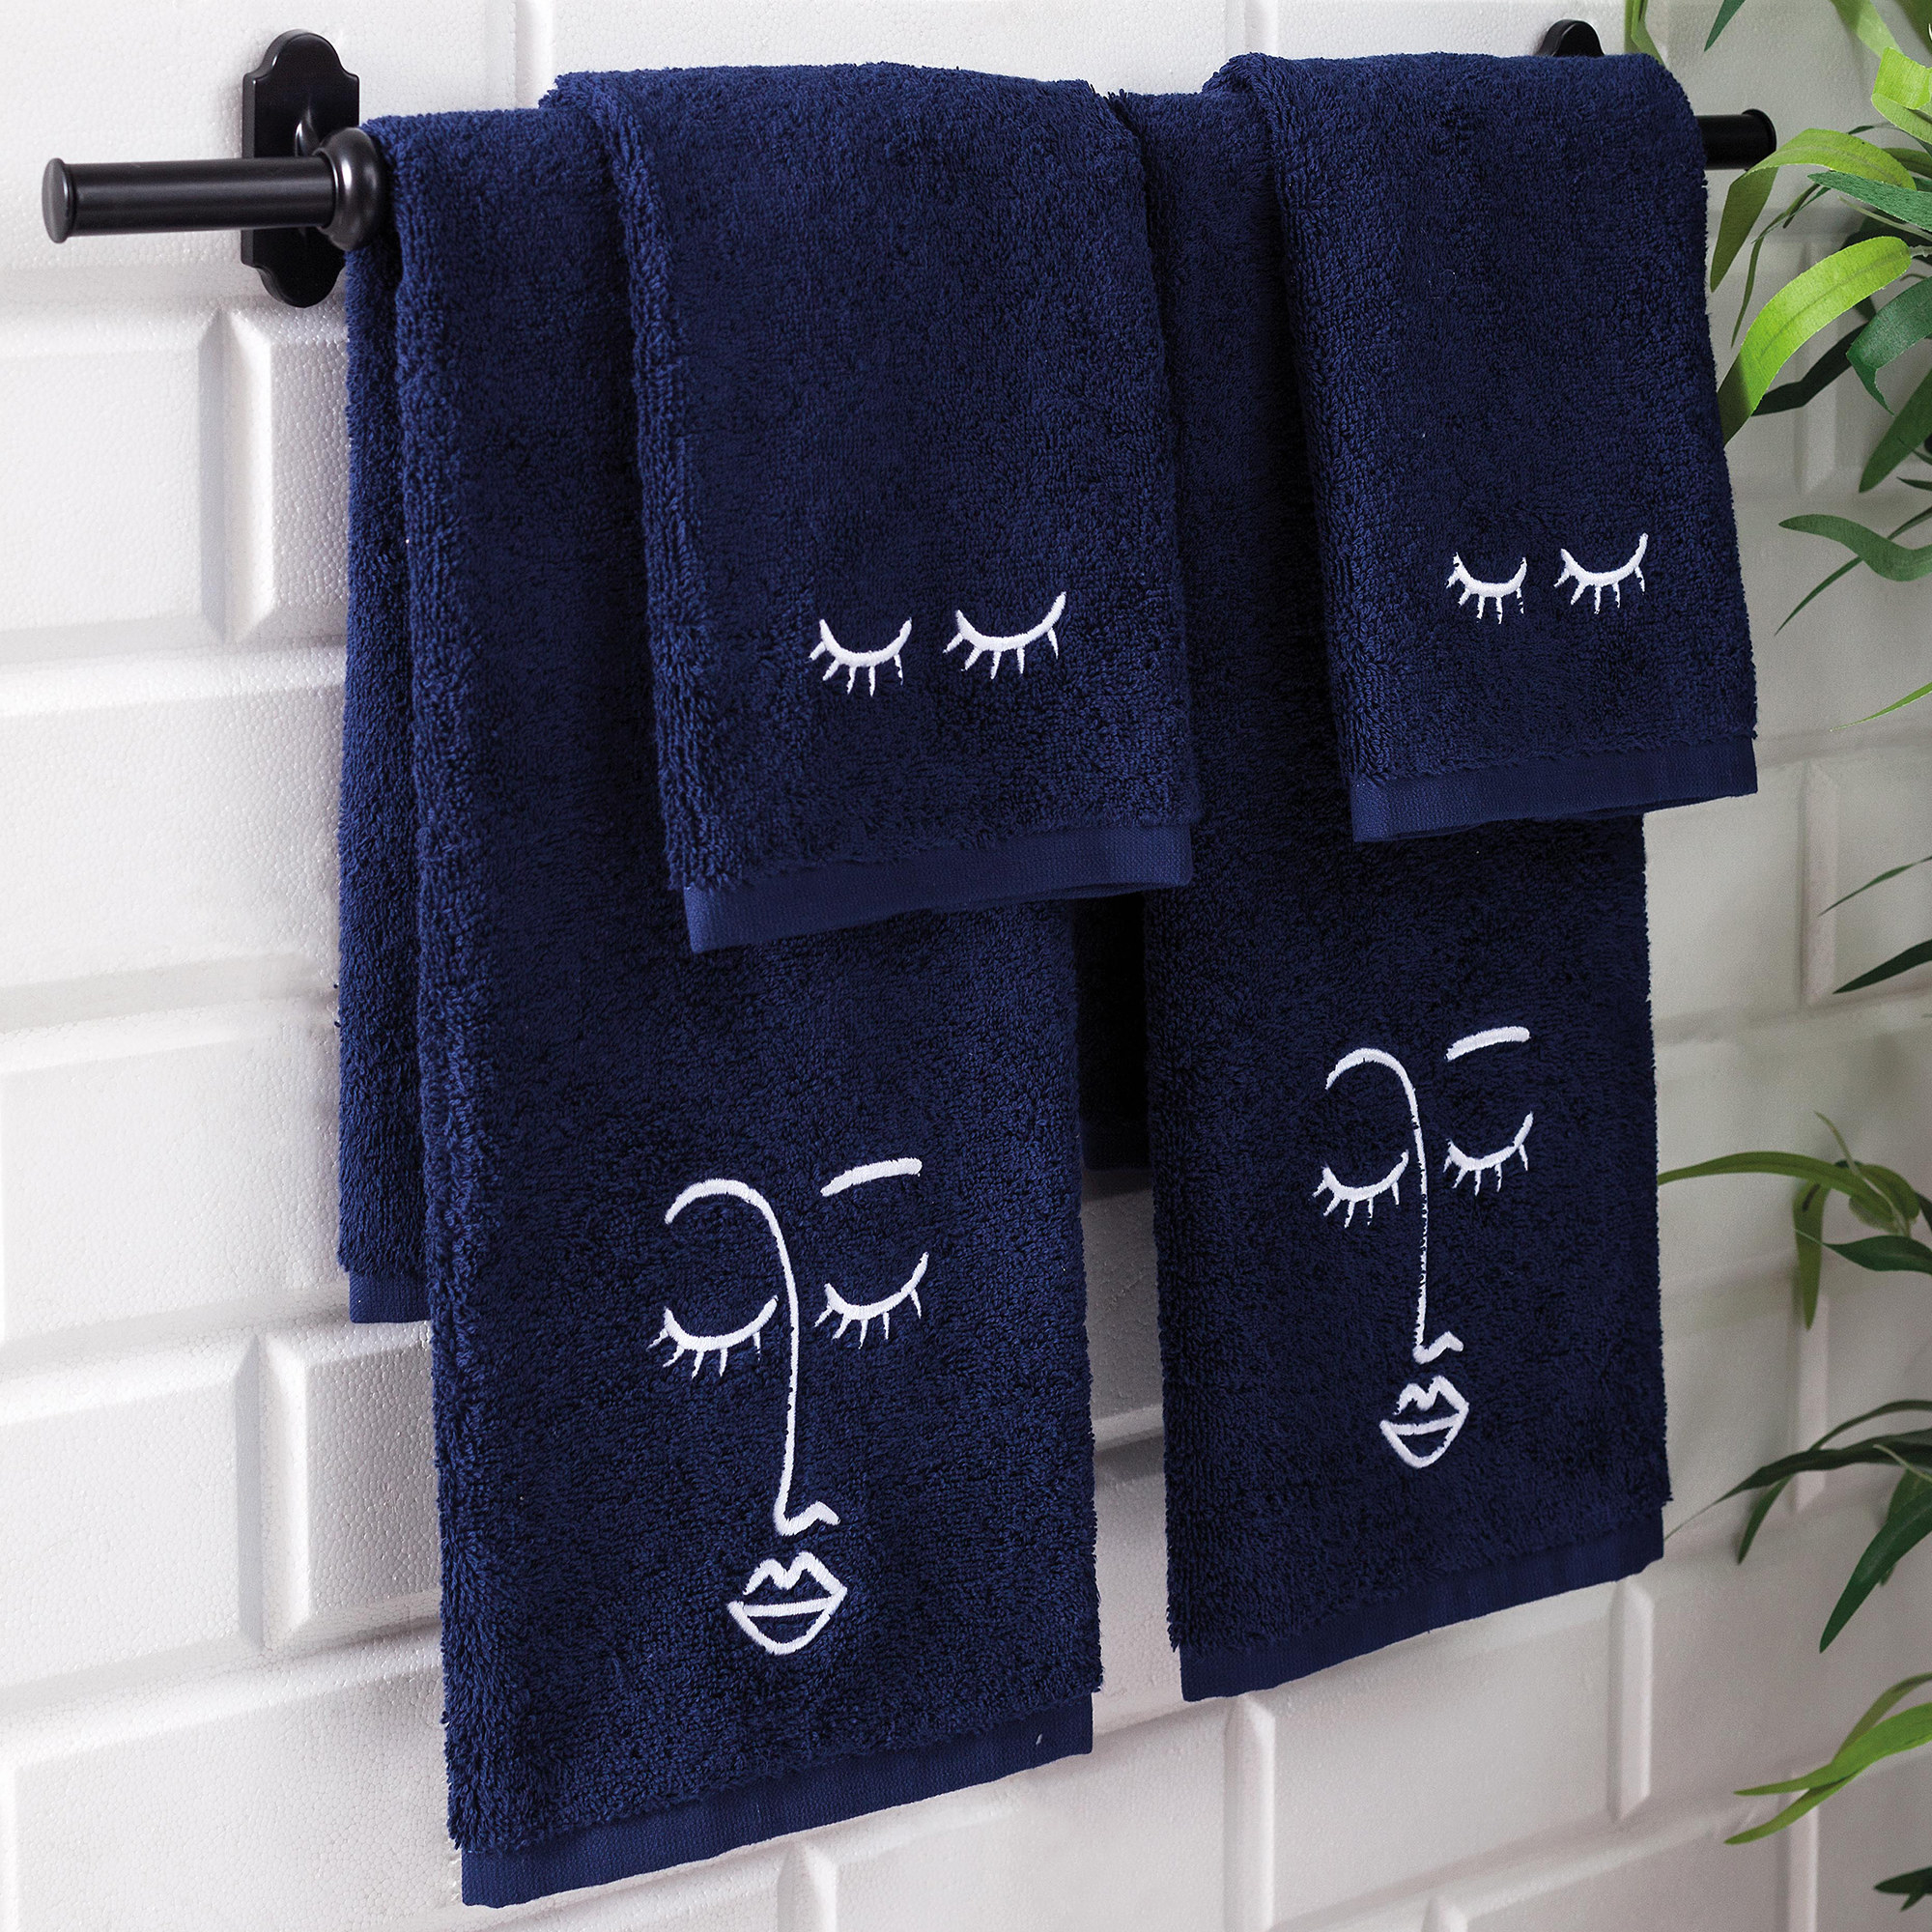 bathroom towel set hanging on drying rack